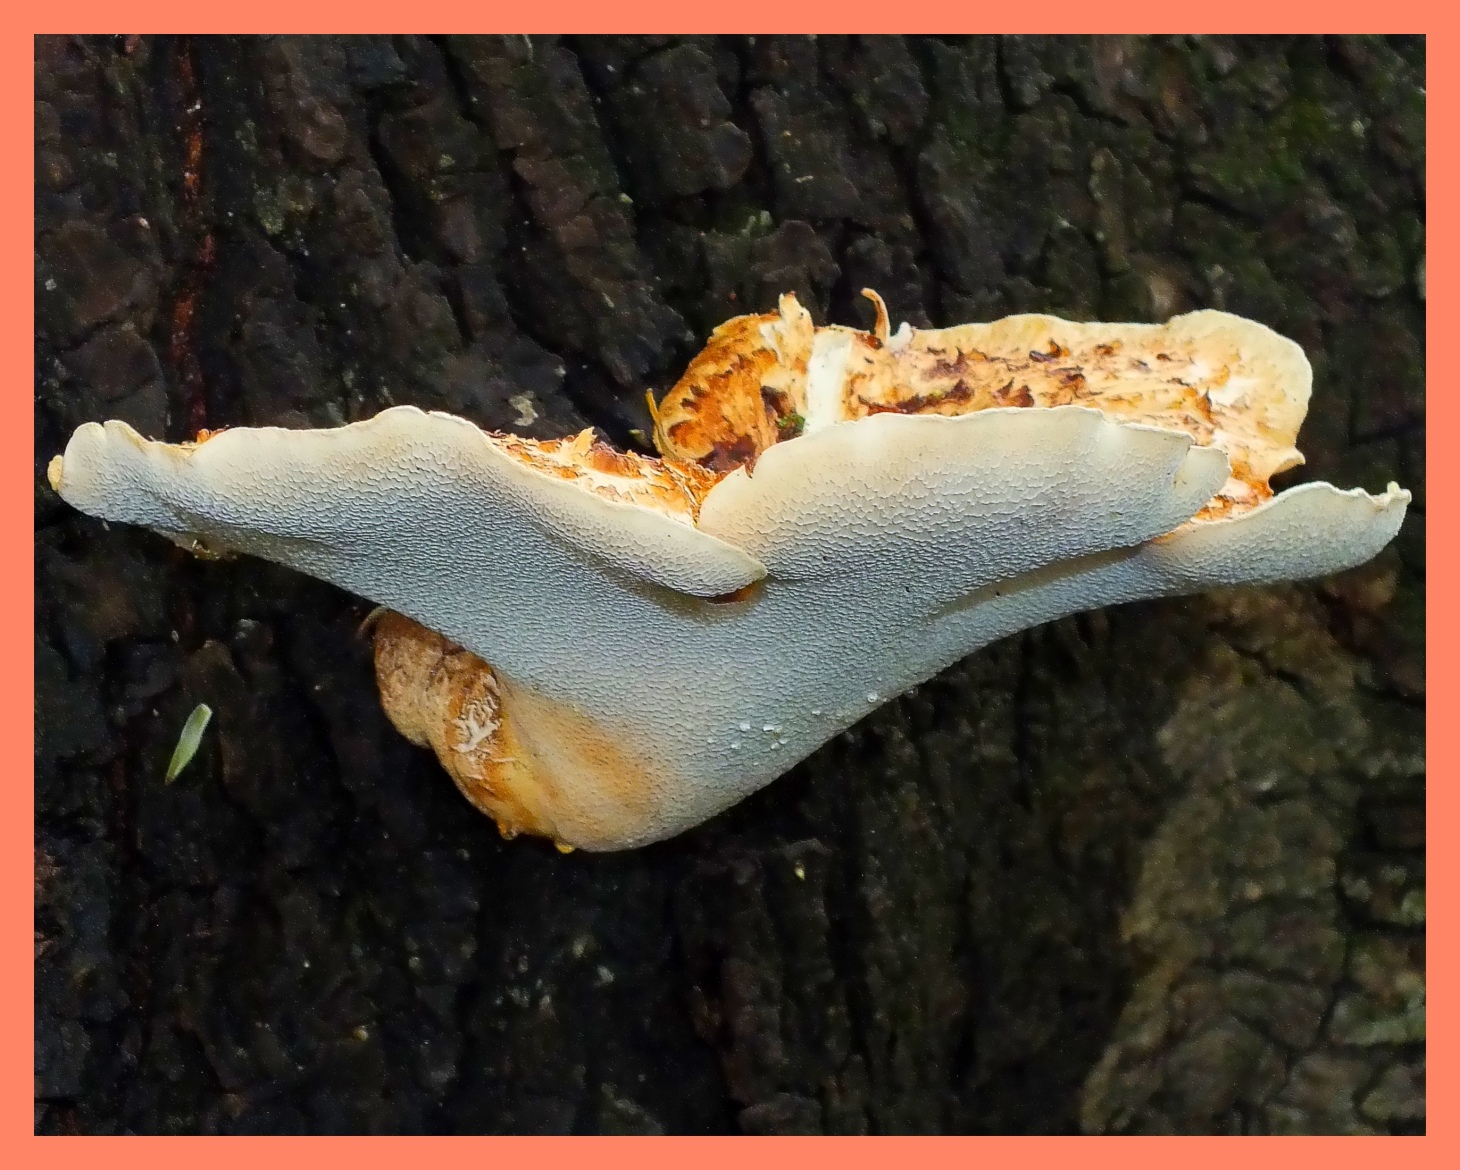 Polyporus squamosus - Dryad's Saddle (Mushroom growing upon a Tree). Photo by Thomas Peace c. 2015